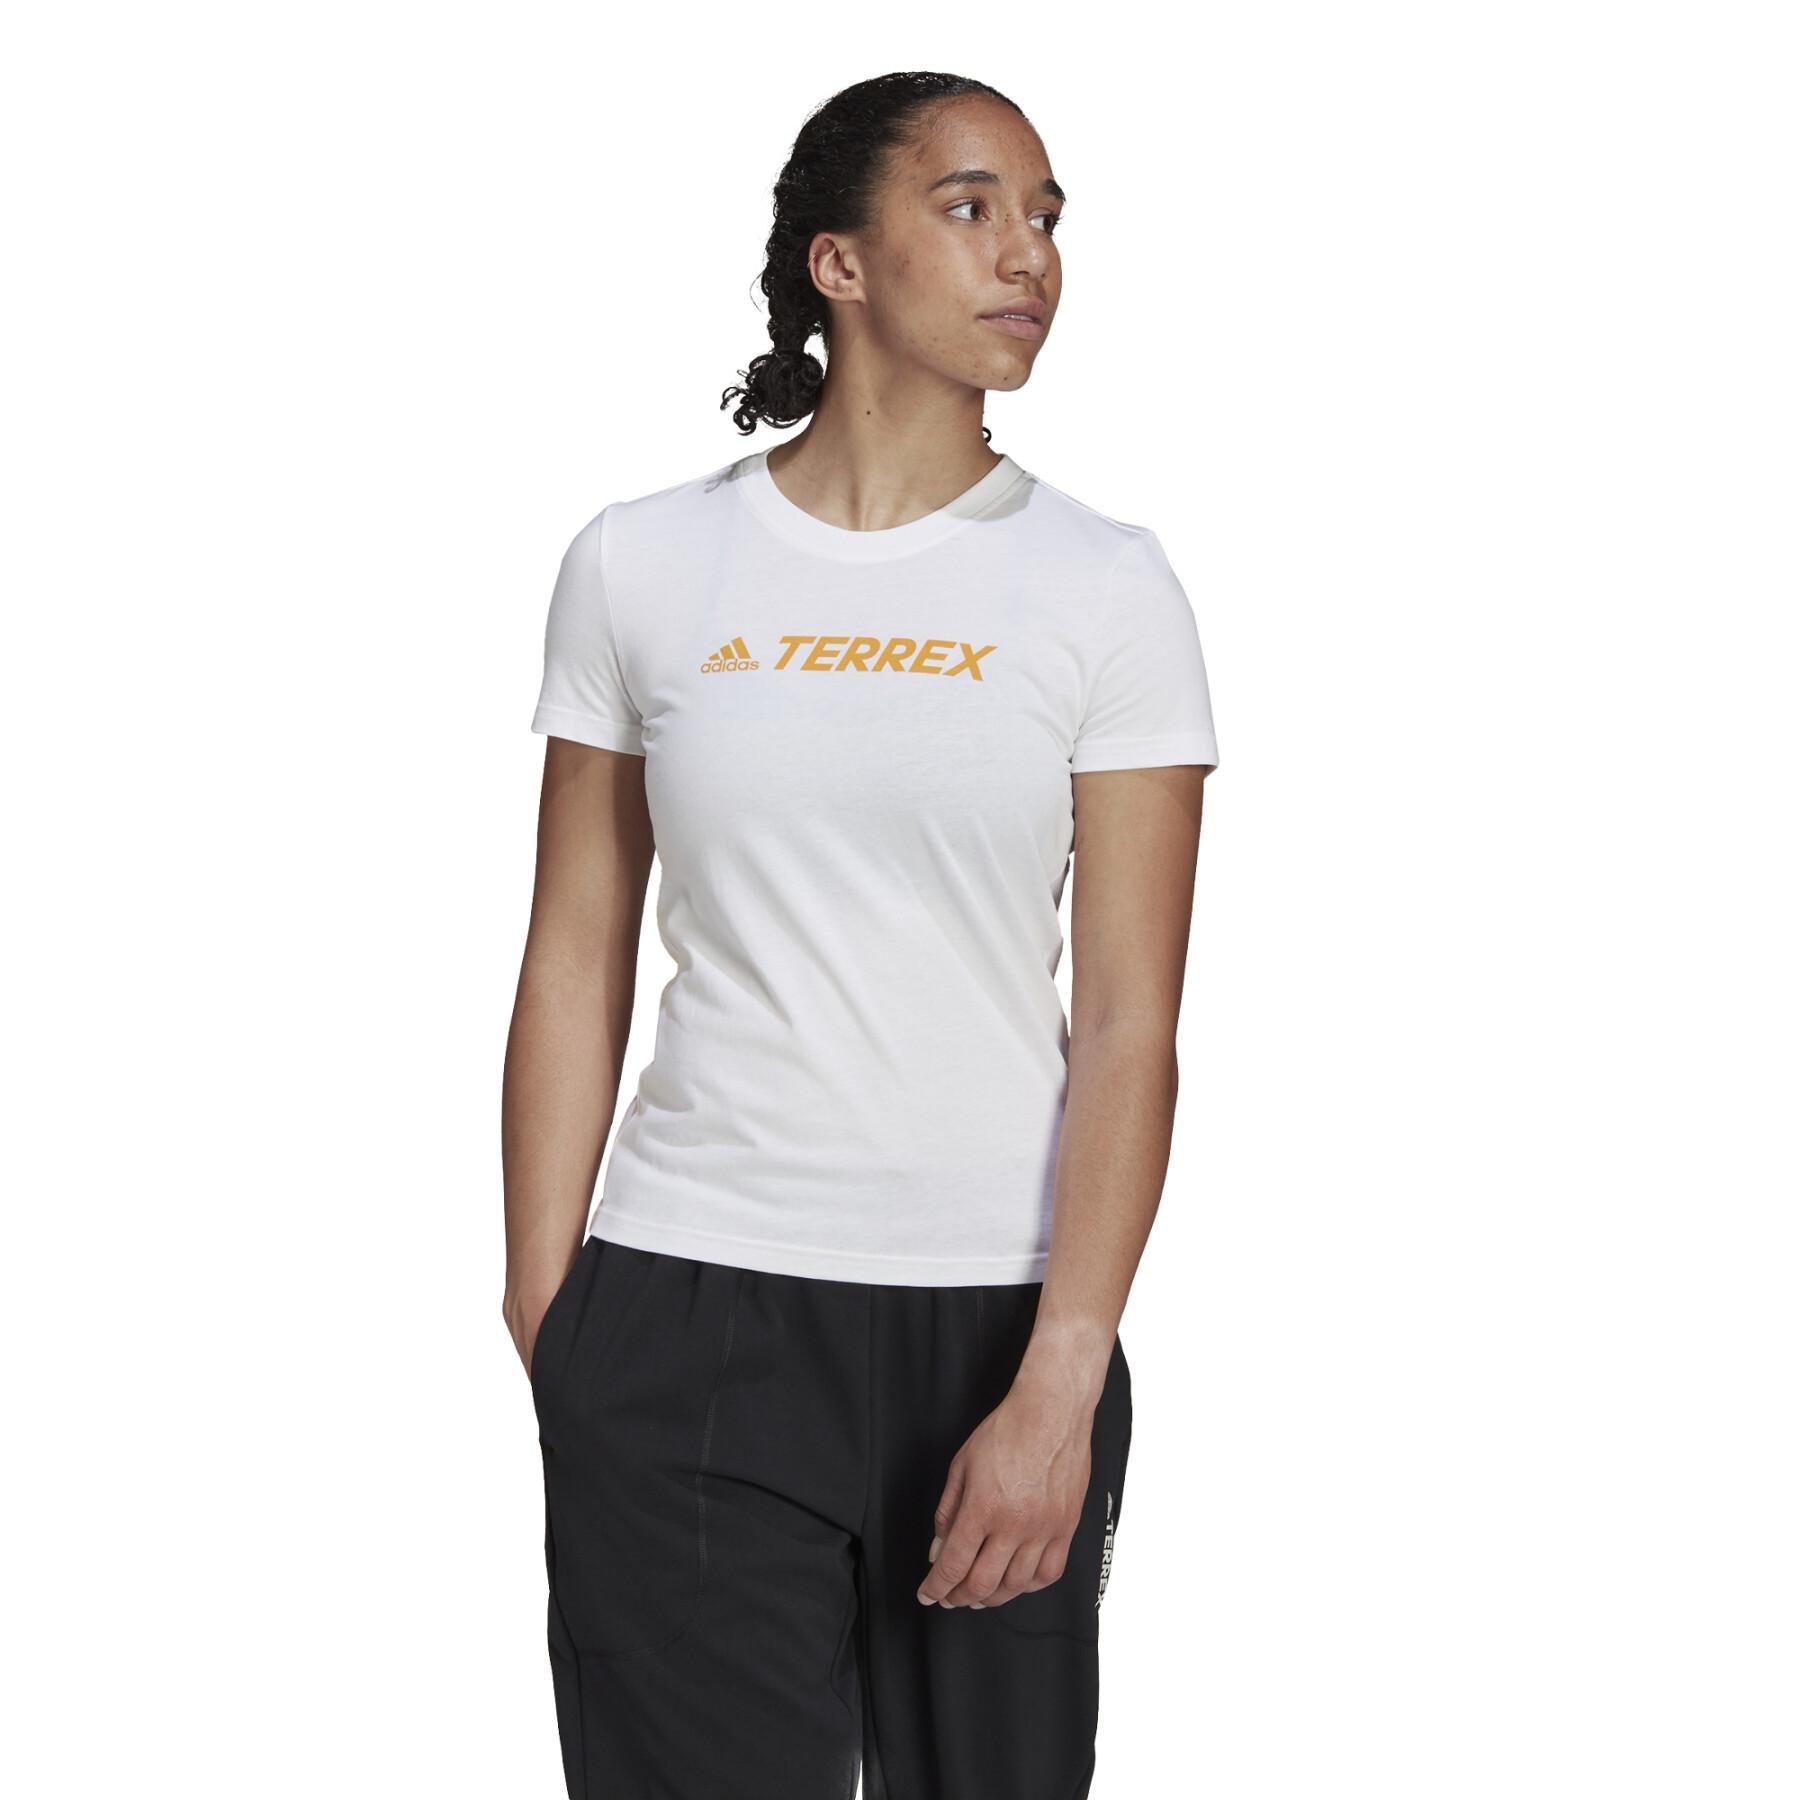 Maglietta da donna adidas Terrex Logo